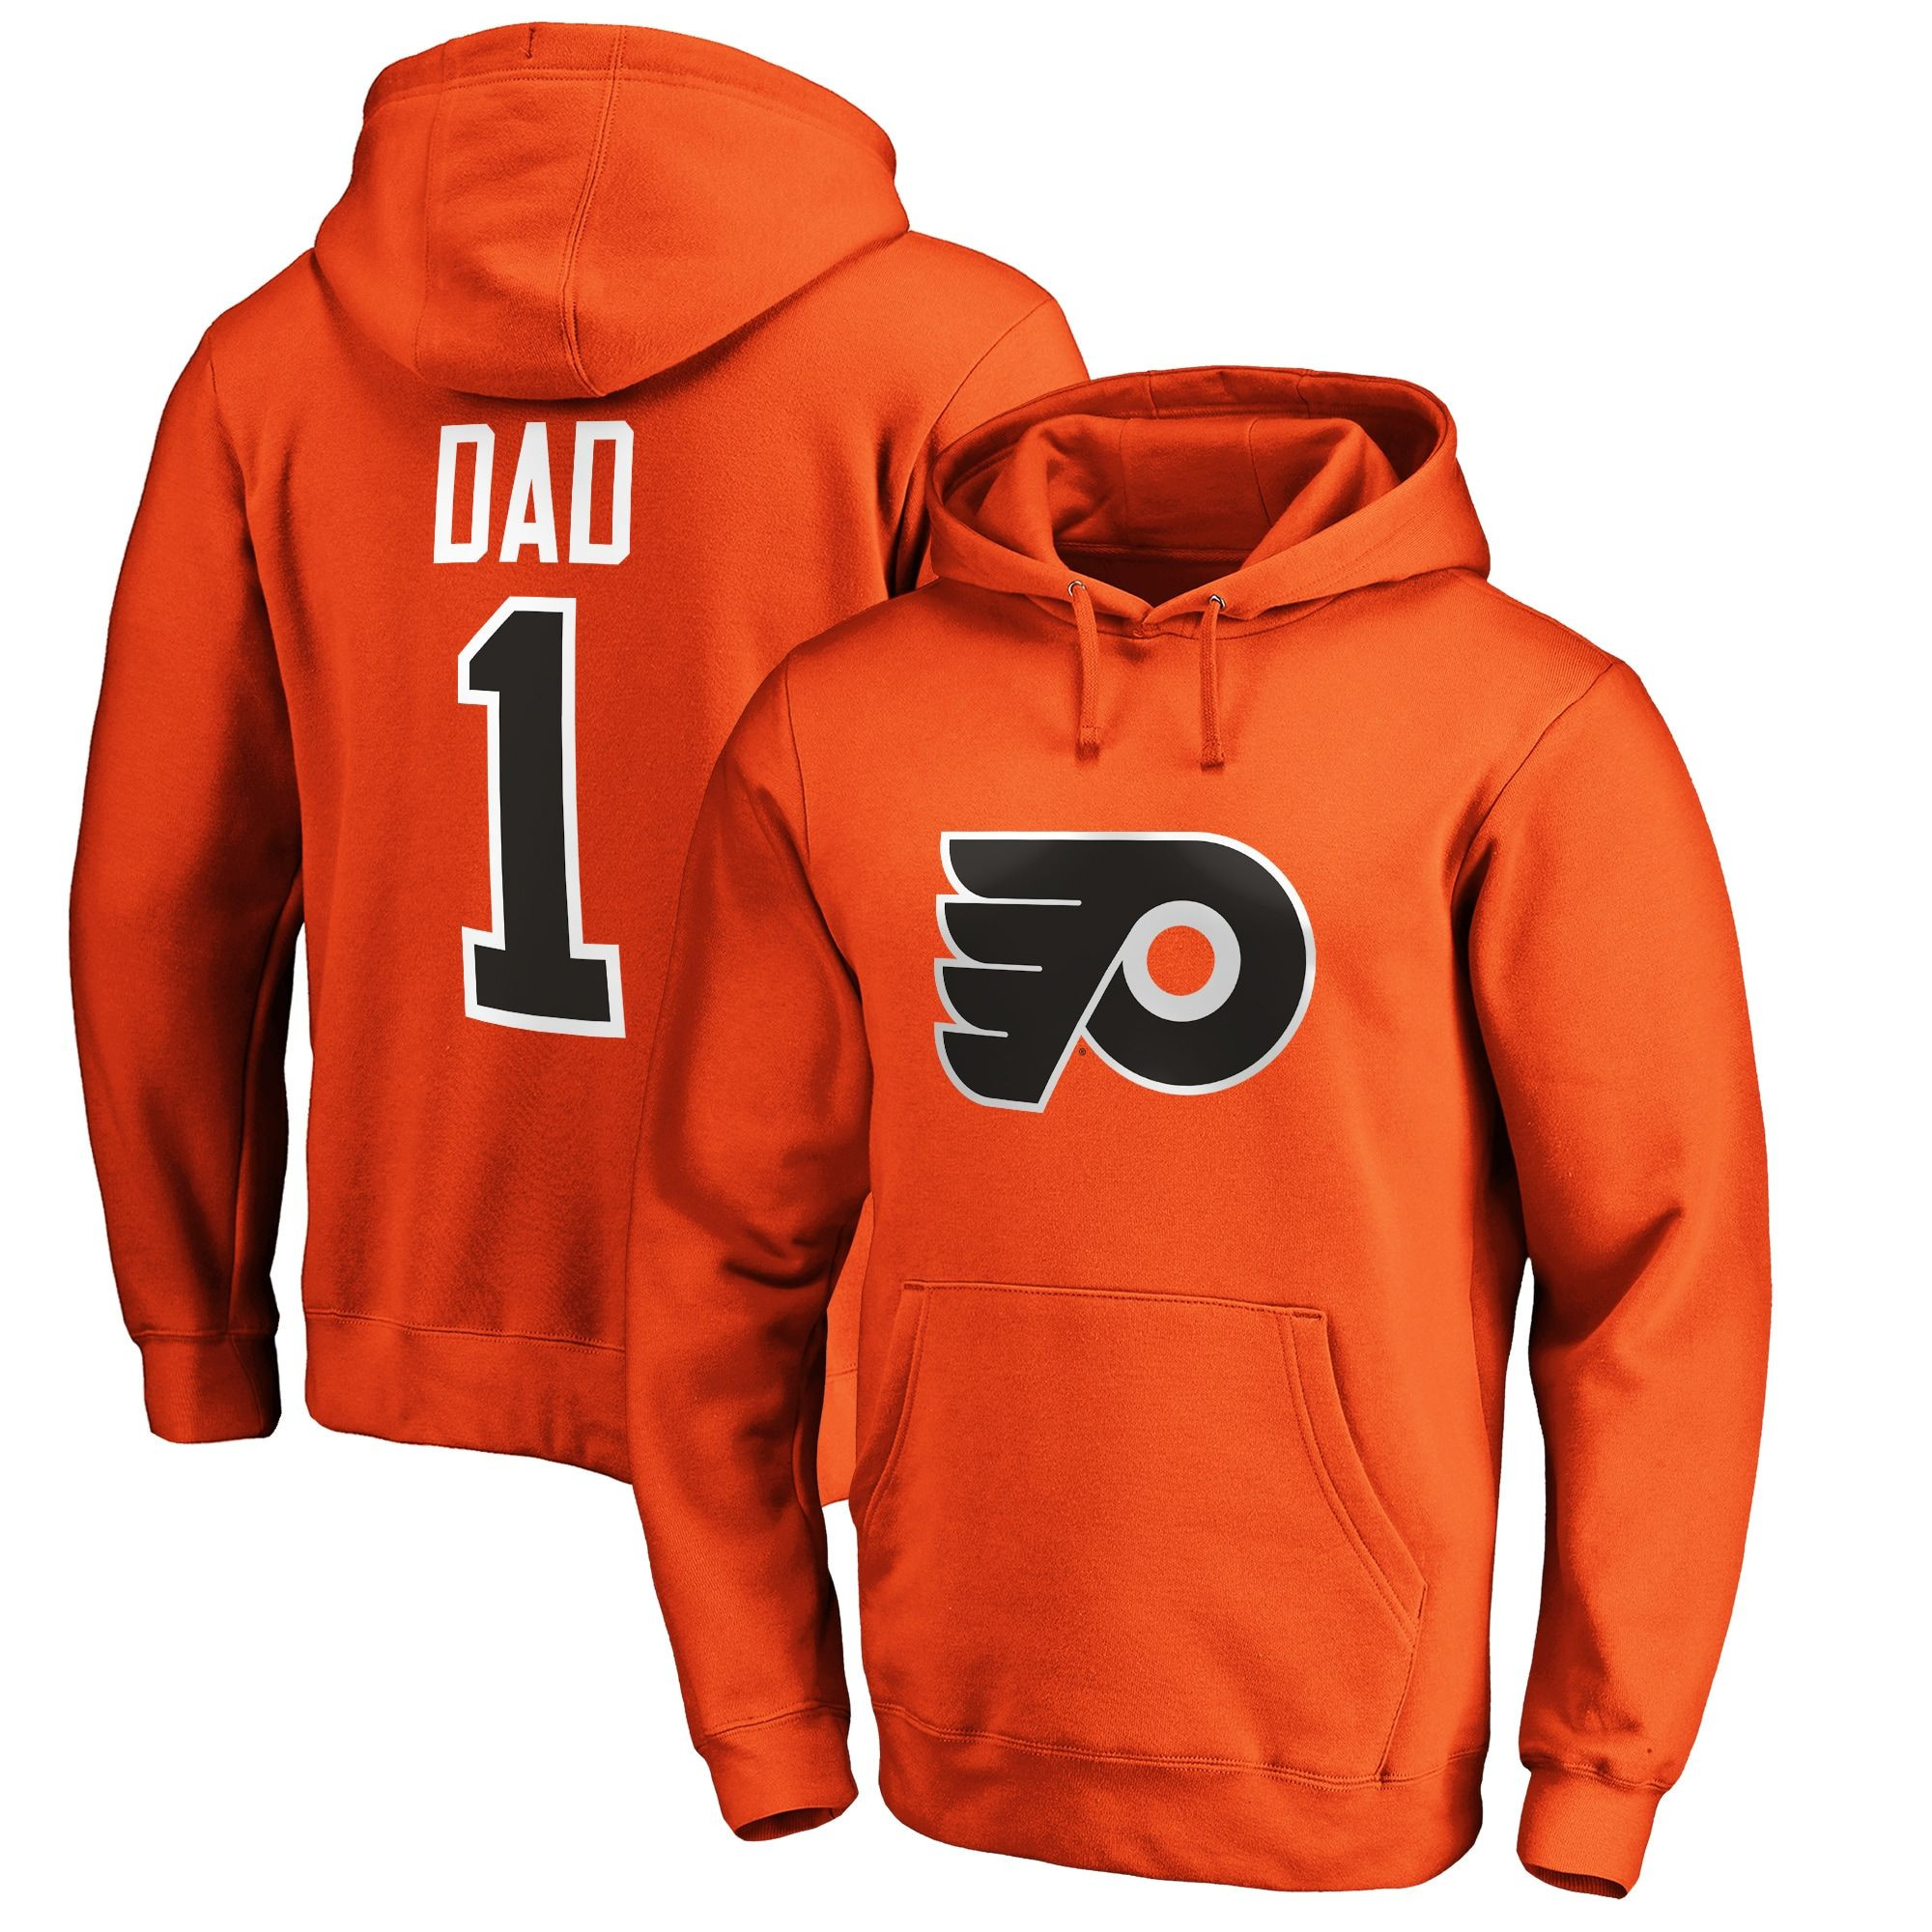 Men’s Orange Philadelphia Flyers #1 Dad Pullover Unisex Hoodie – OwlOhh